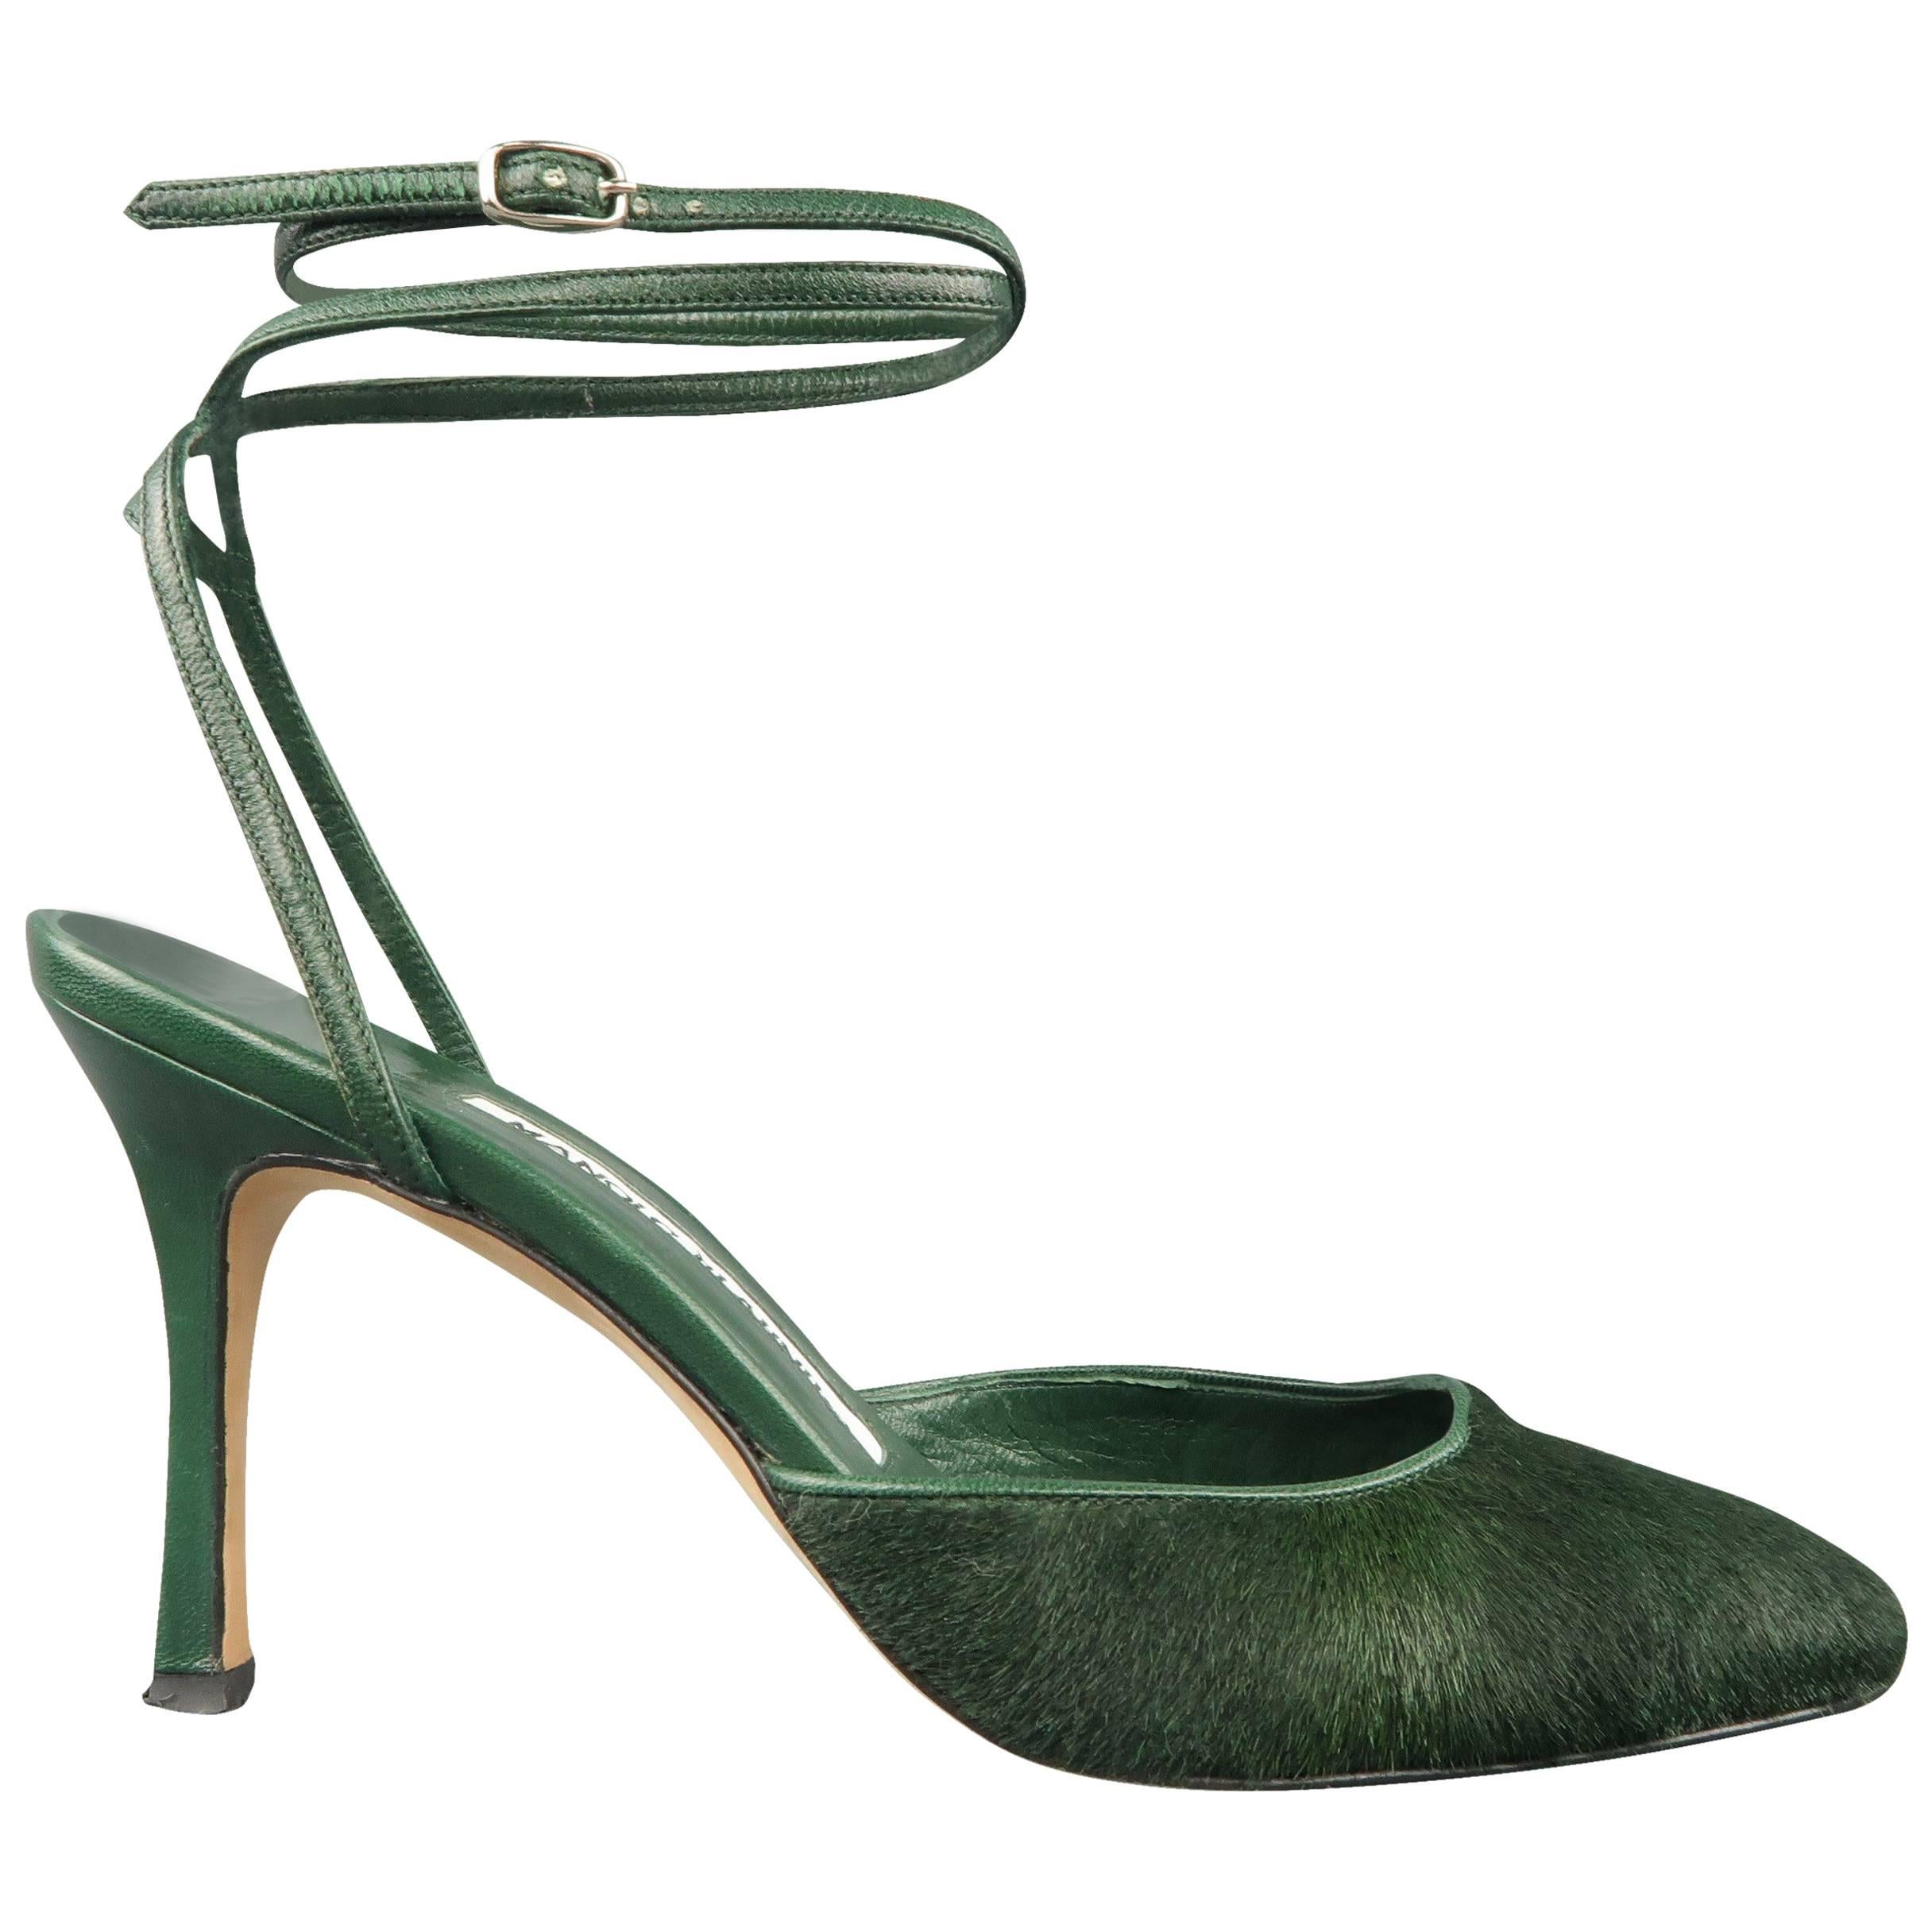 MANOLO BLAHNIK Pumps Heels Size 5.5  - Green Ponyhair & Leather Ankle Strap